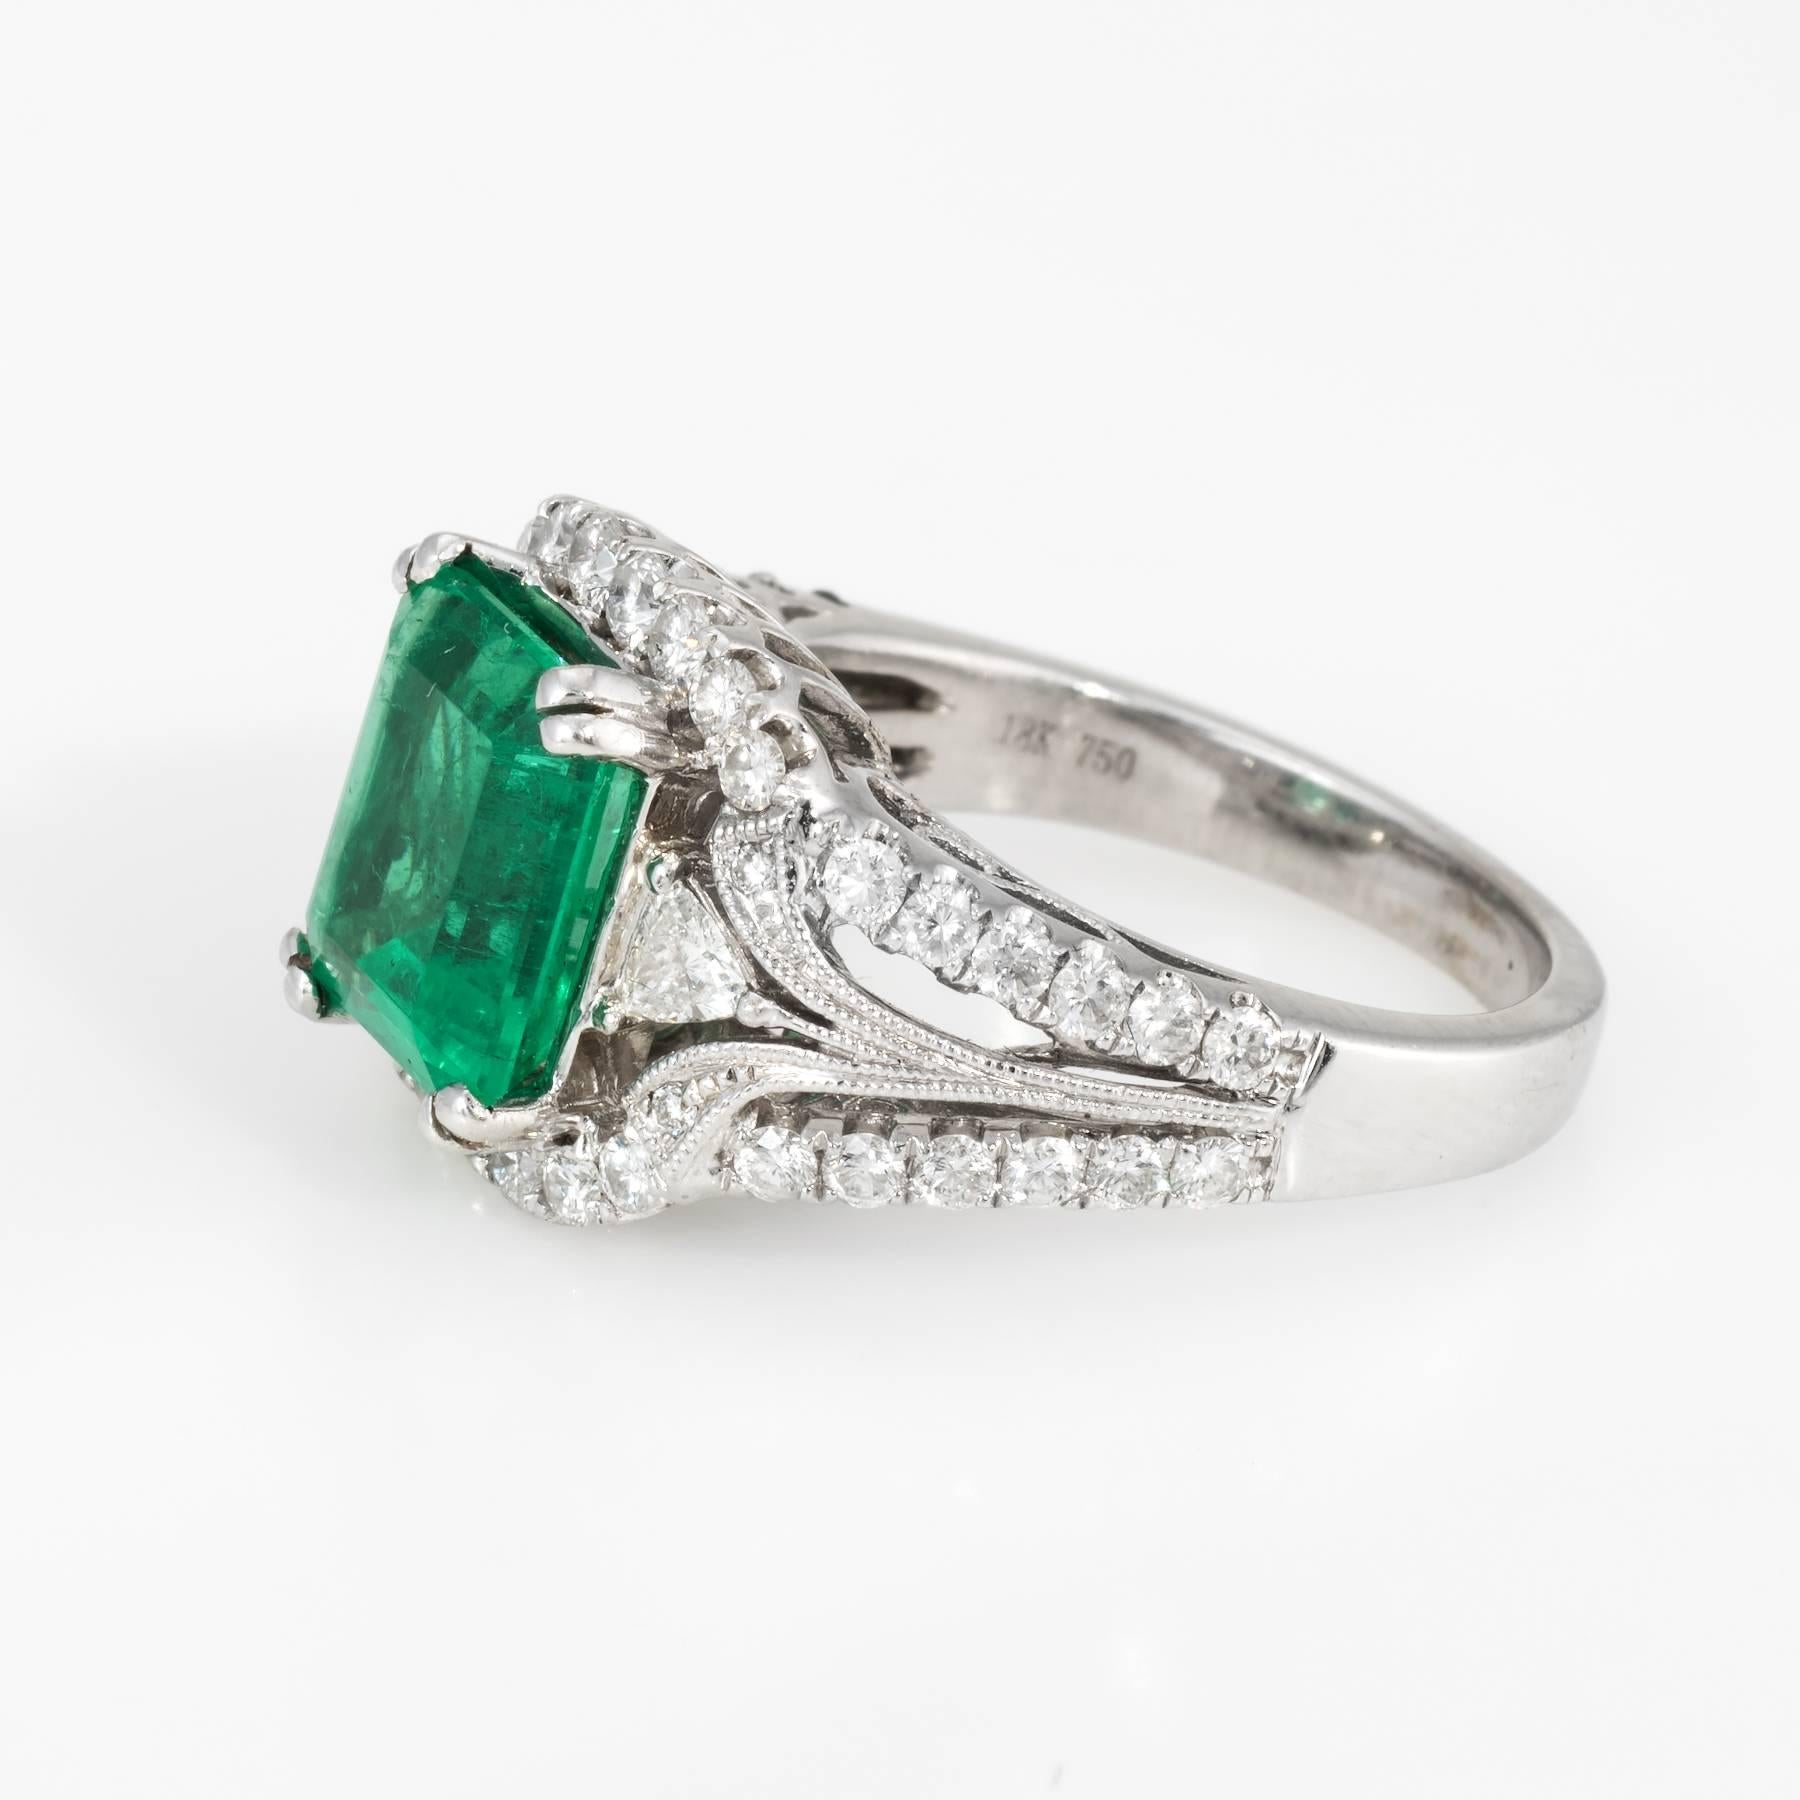 Emerald Cut Natural Emerald Diamond Ring Vintage 18 Karat White Gold Heirloom